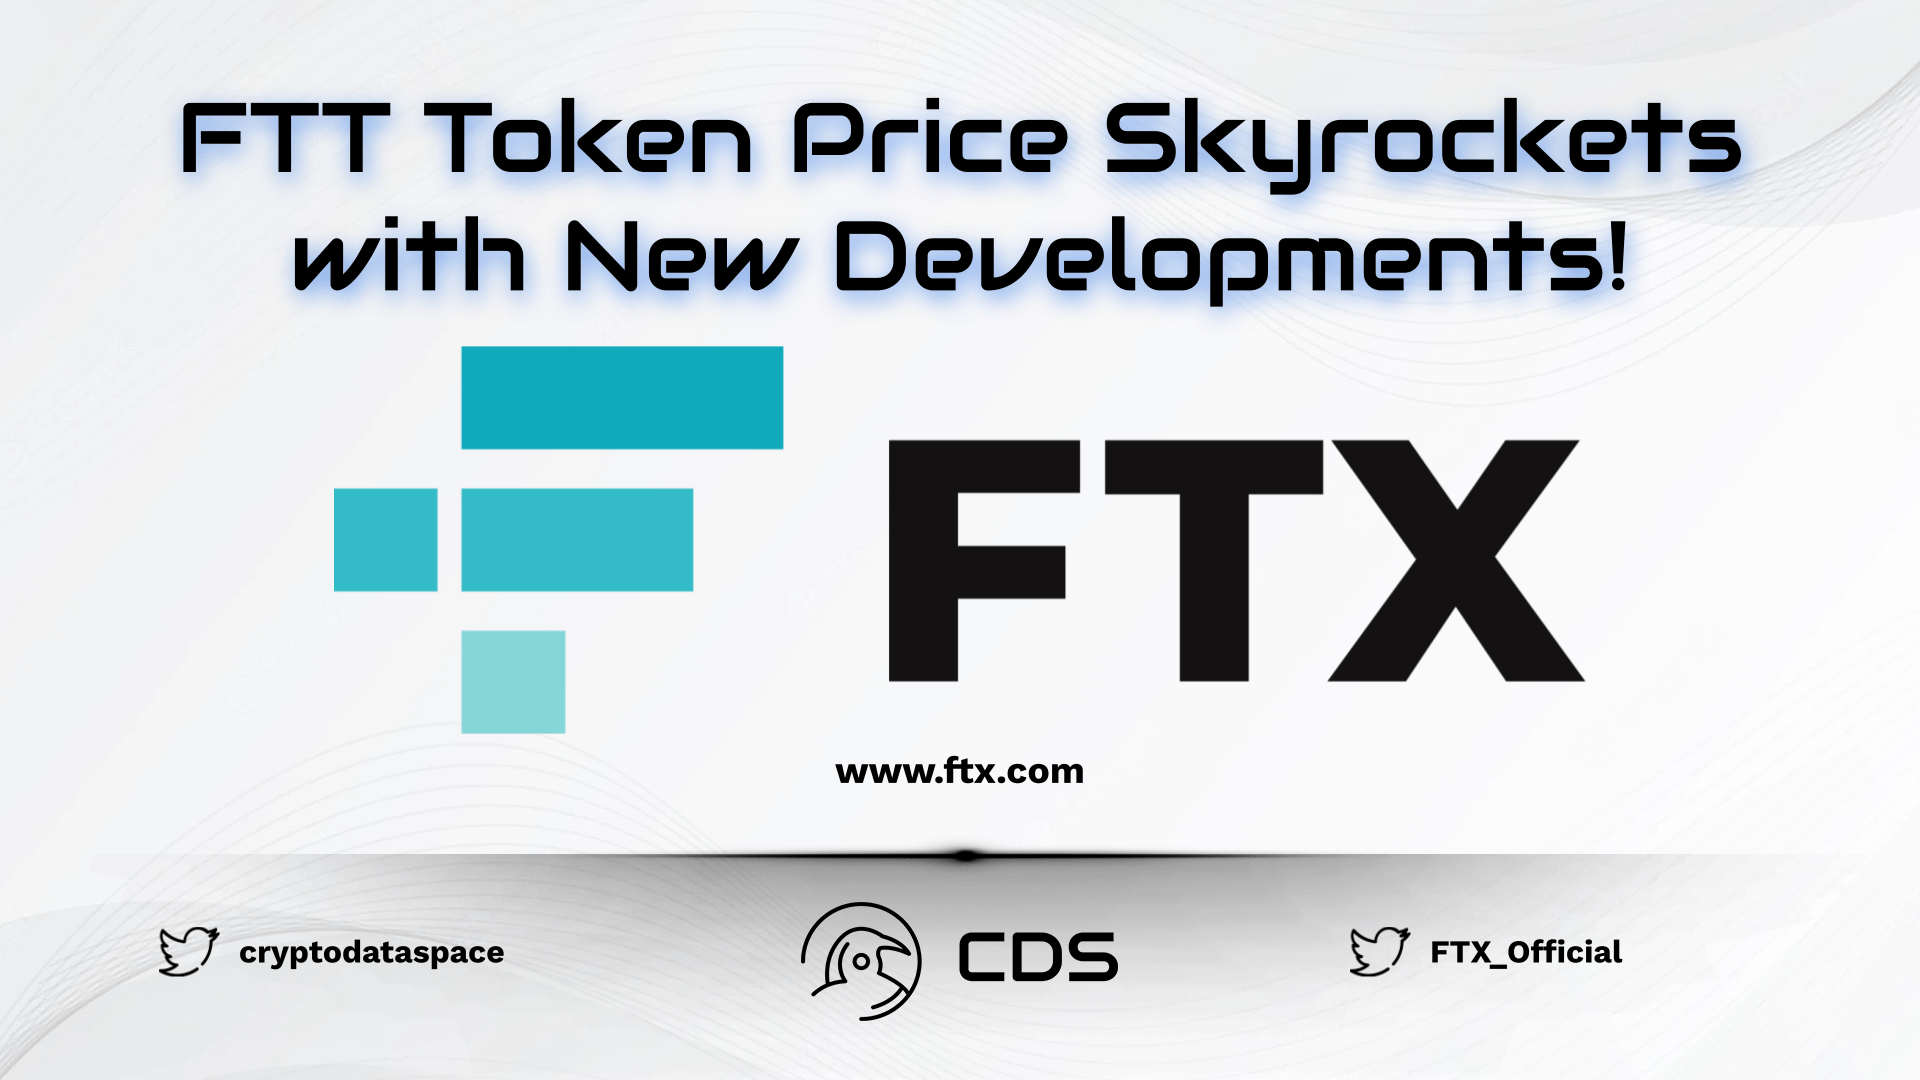 FTT Token Price Skyrockets with New Developments!